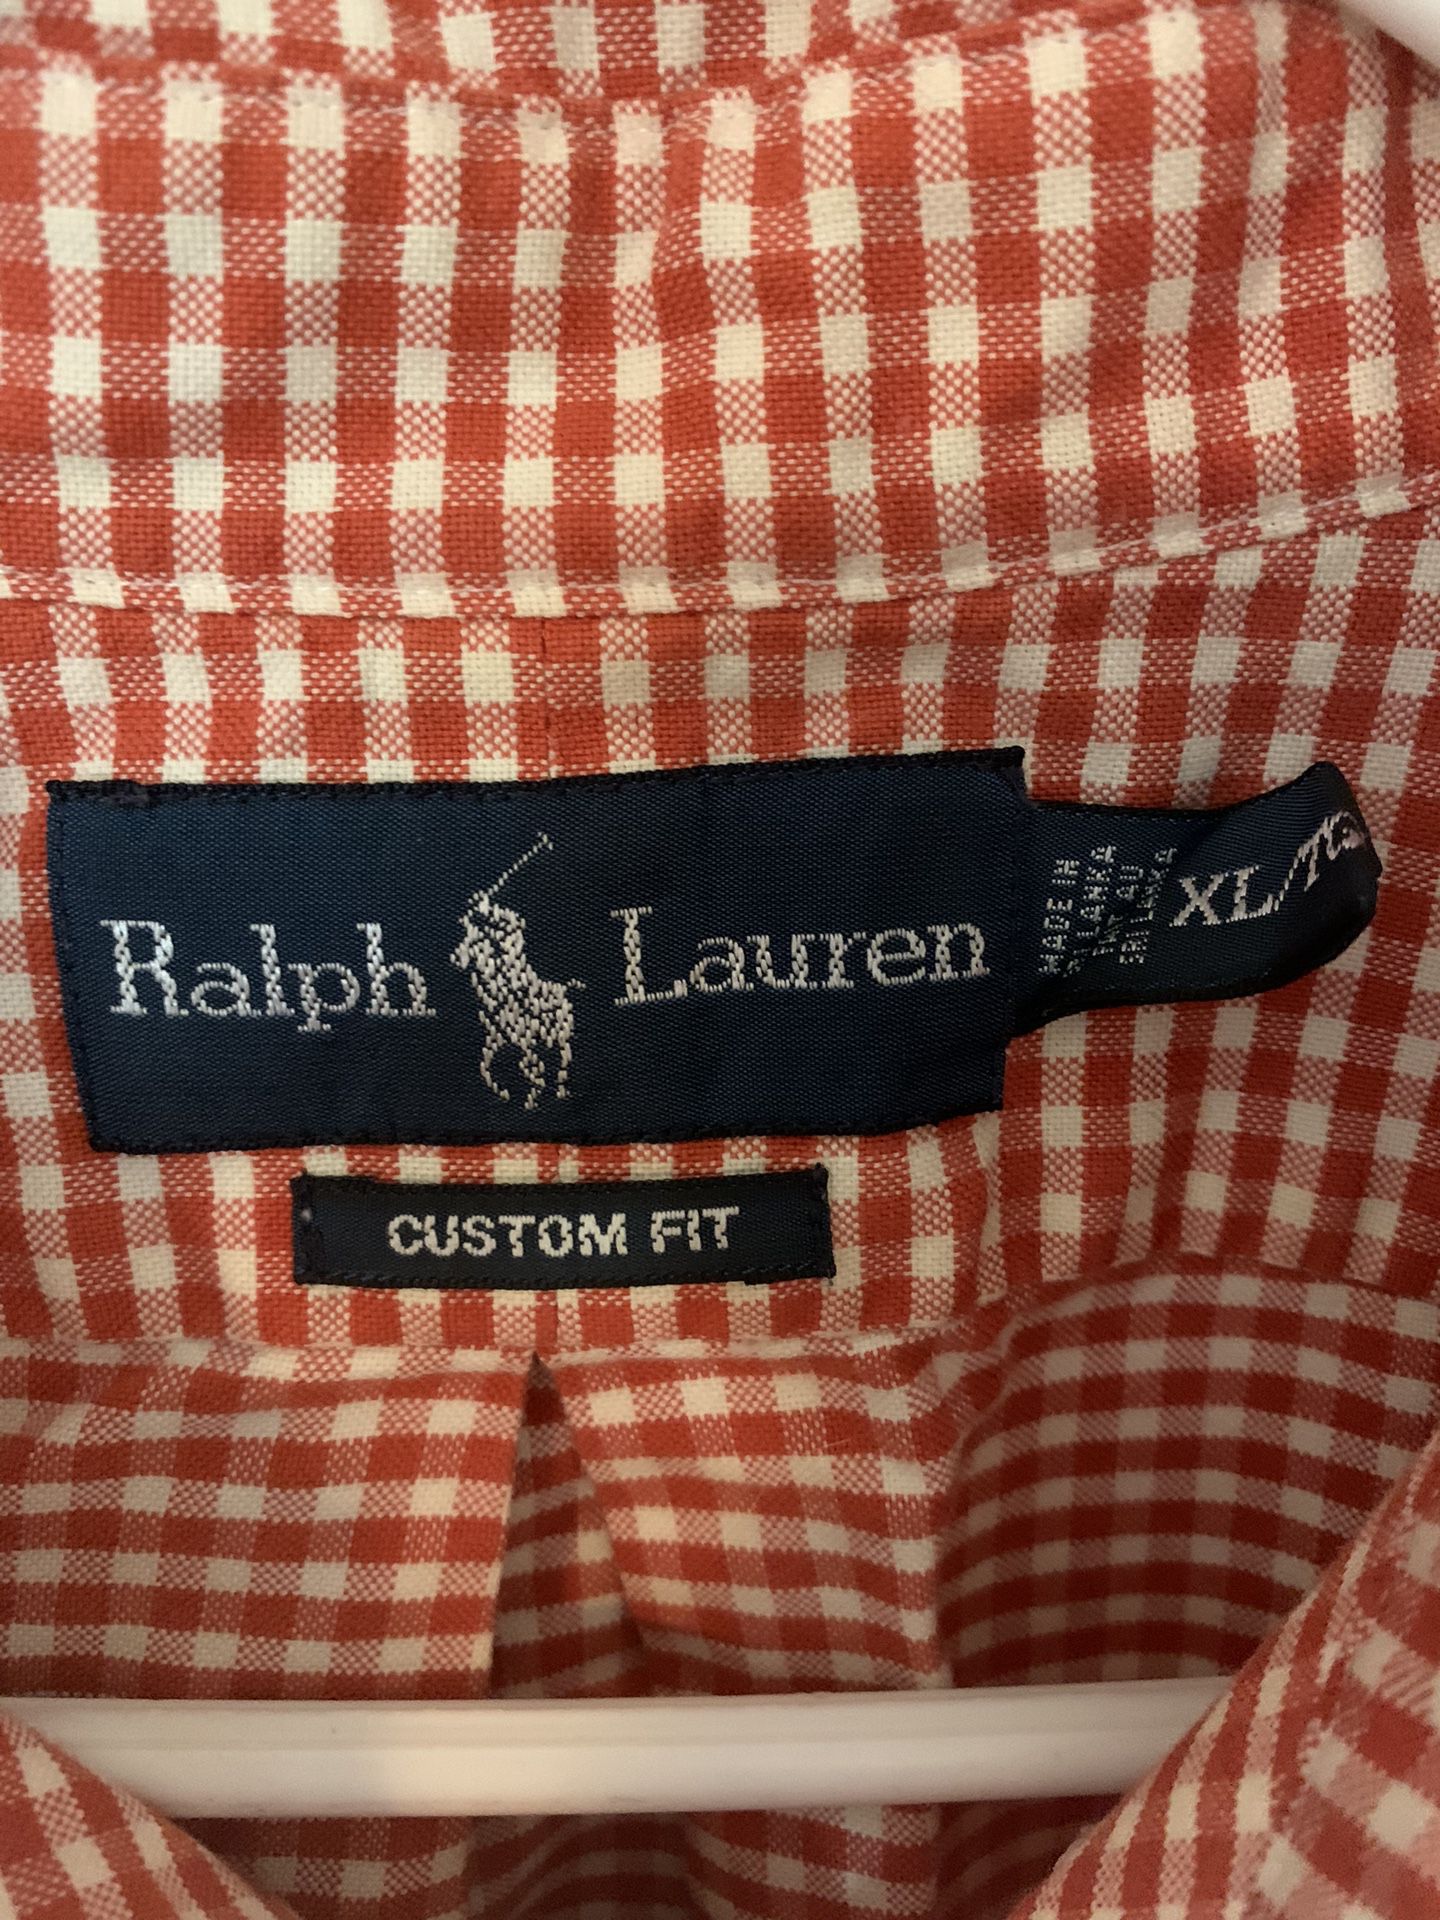 Ralph Lauren Custom Fit Shirt Men's Size XL Orange White Check Plaid Button Down